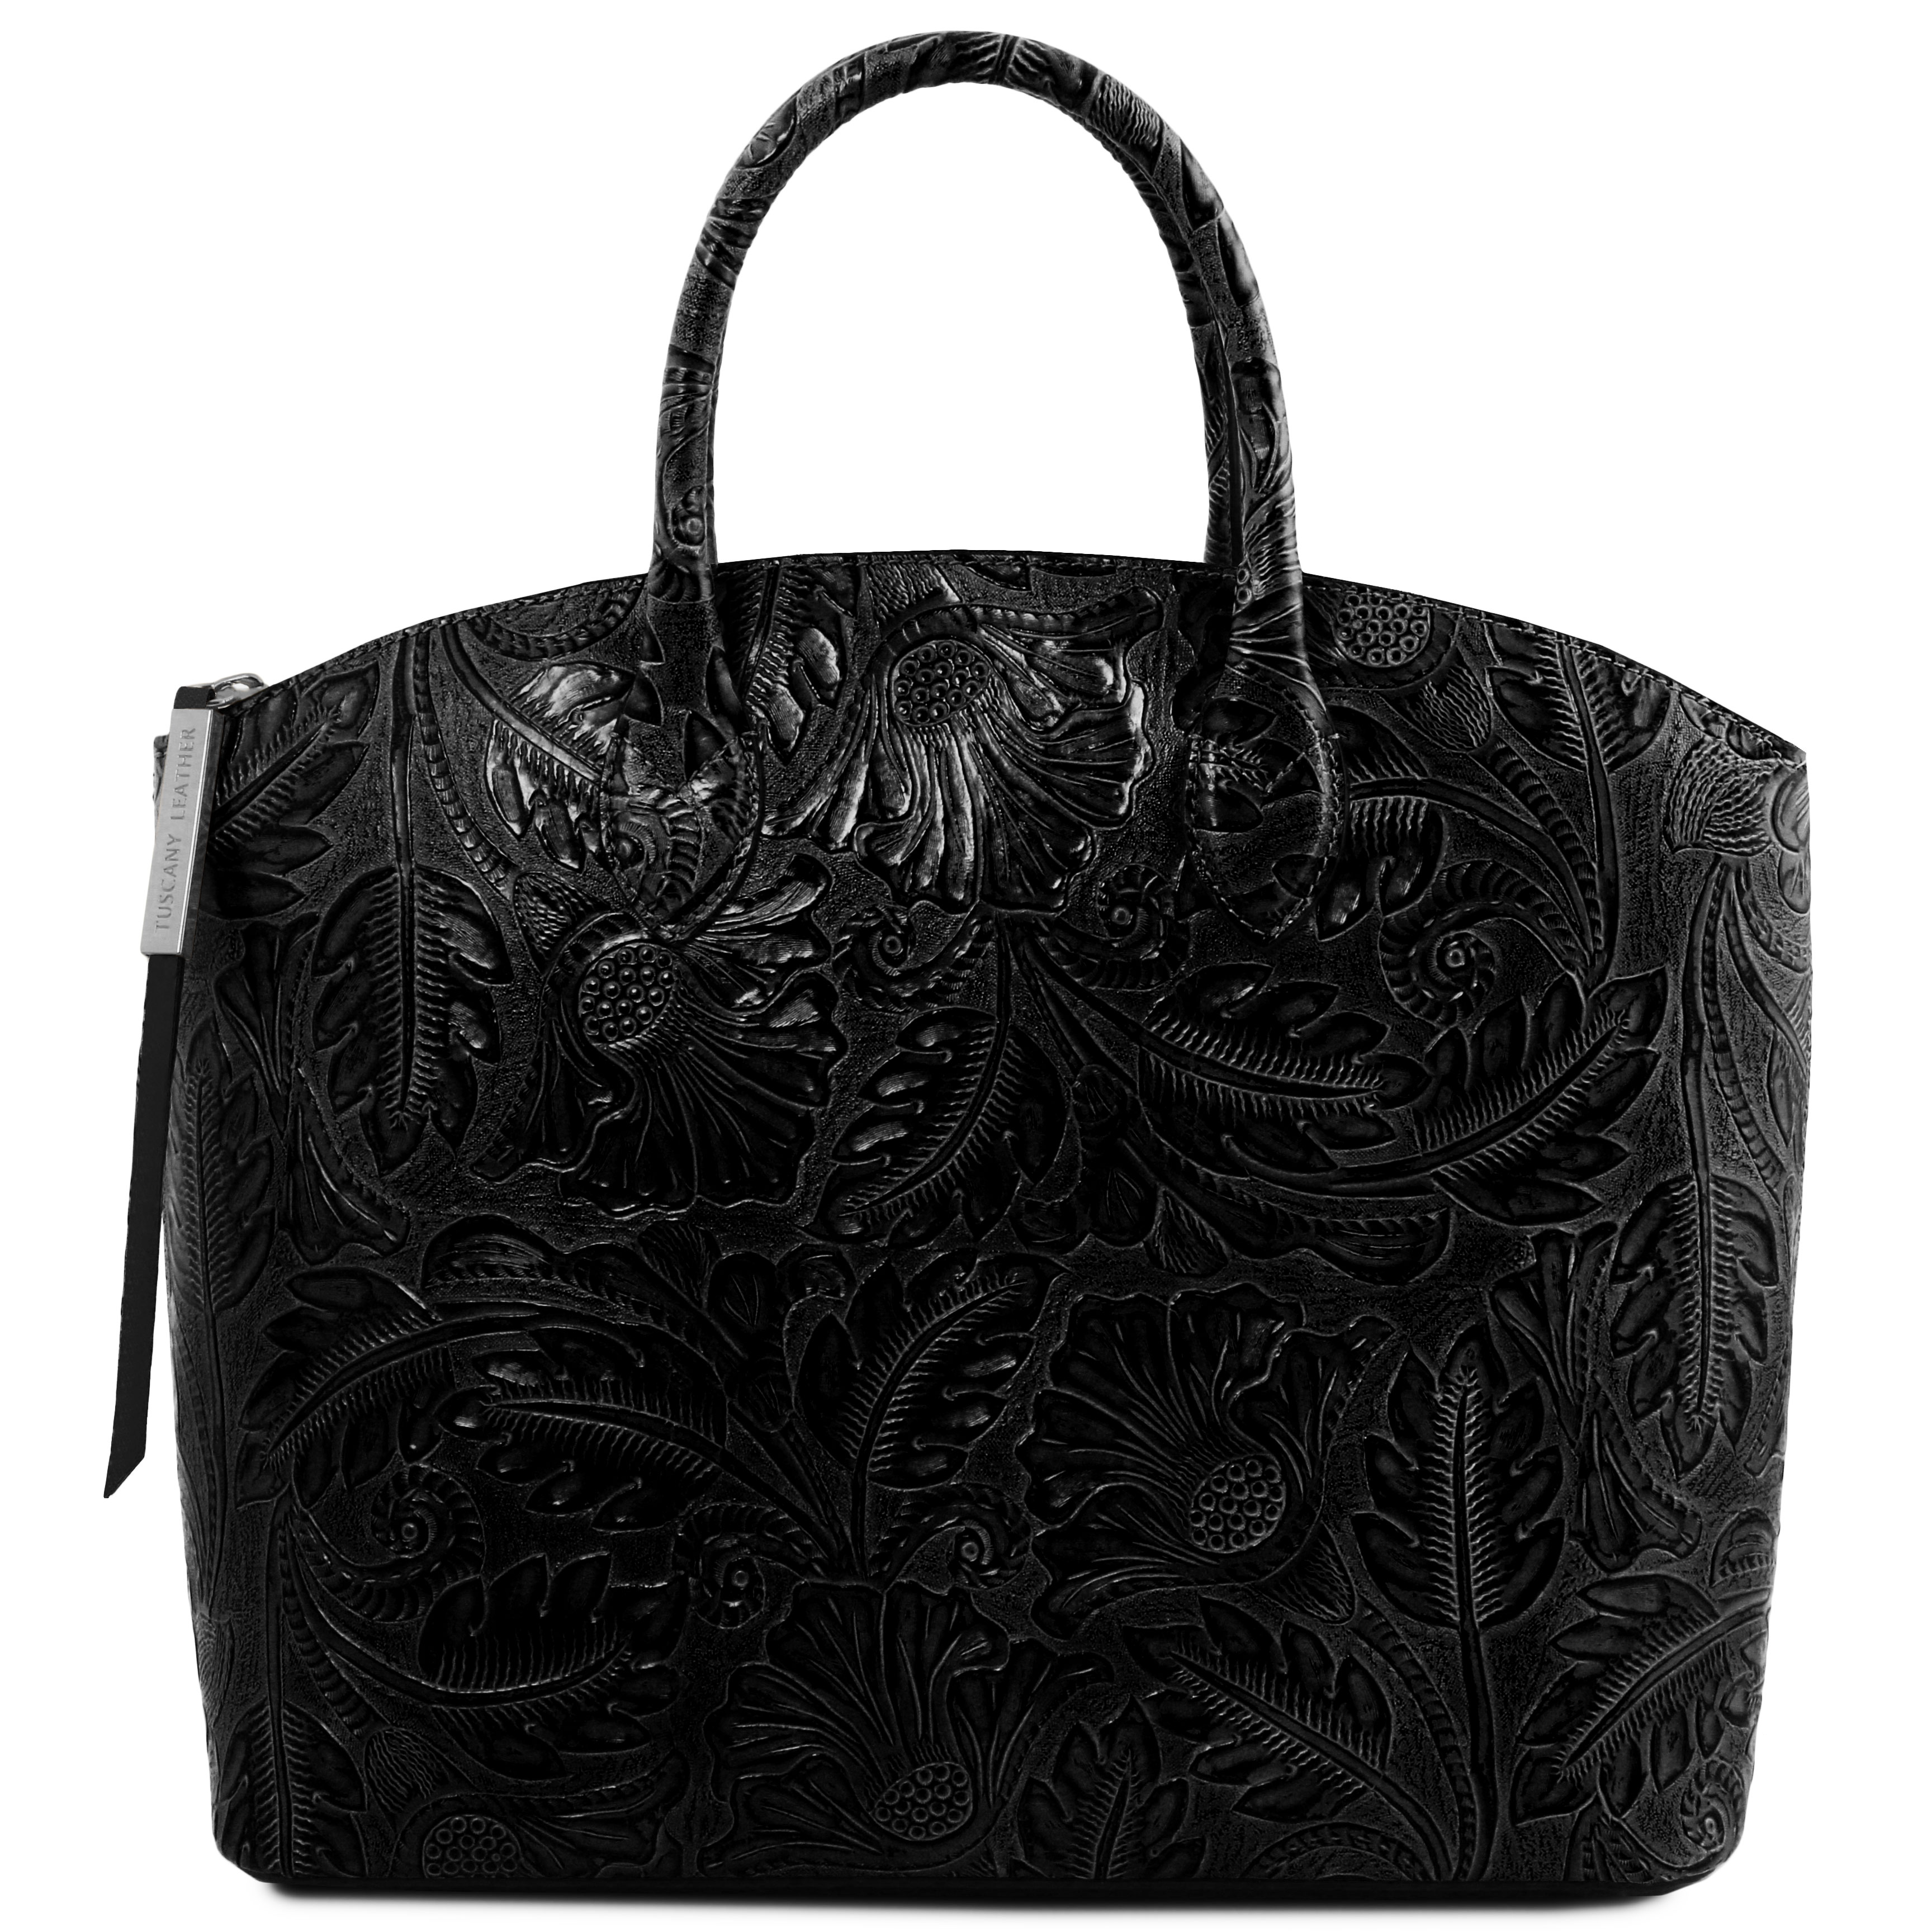 Geanta piele naturala dama Tuscany Leather, neagra, cu imprimeu floral Gaia